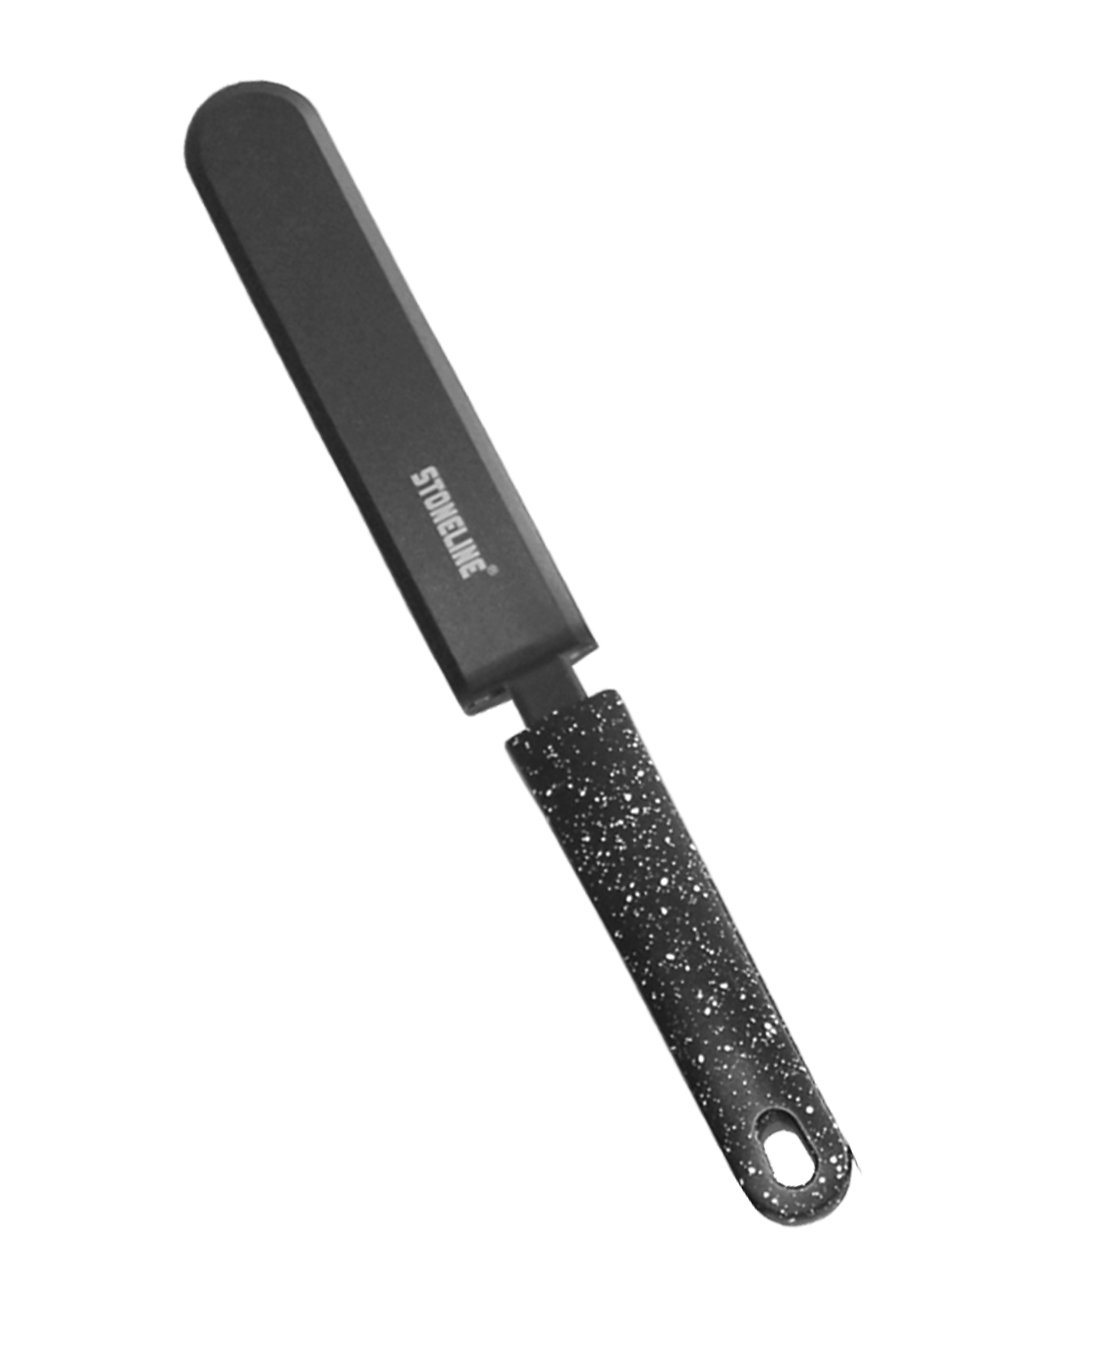 STONELINE® Angled Spatula 31.5 cm, Palette Knife for Baking, Heat Resistant Nylon